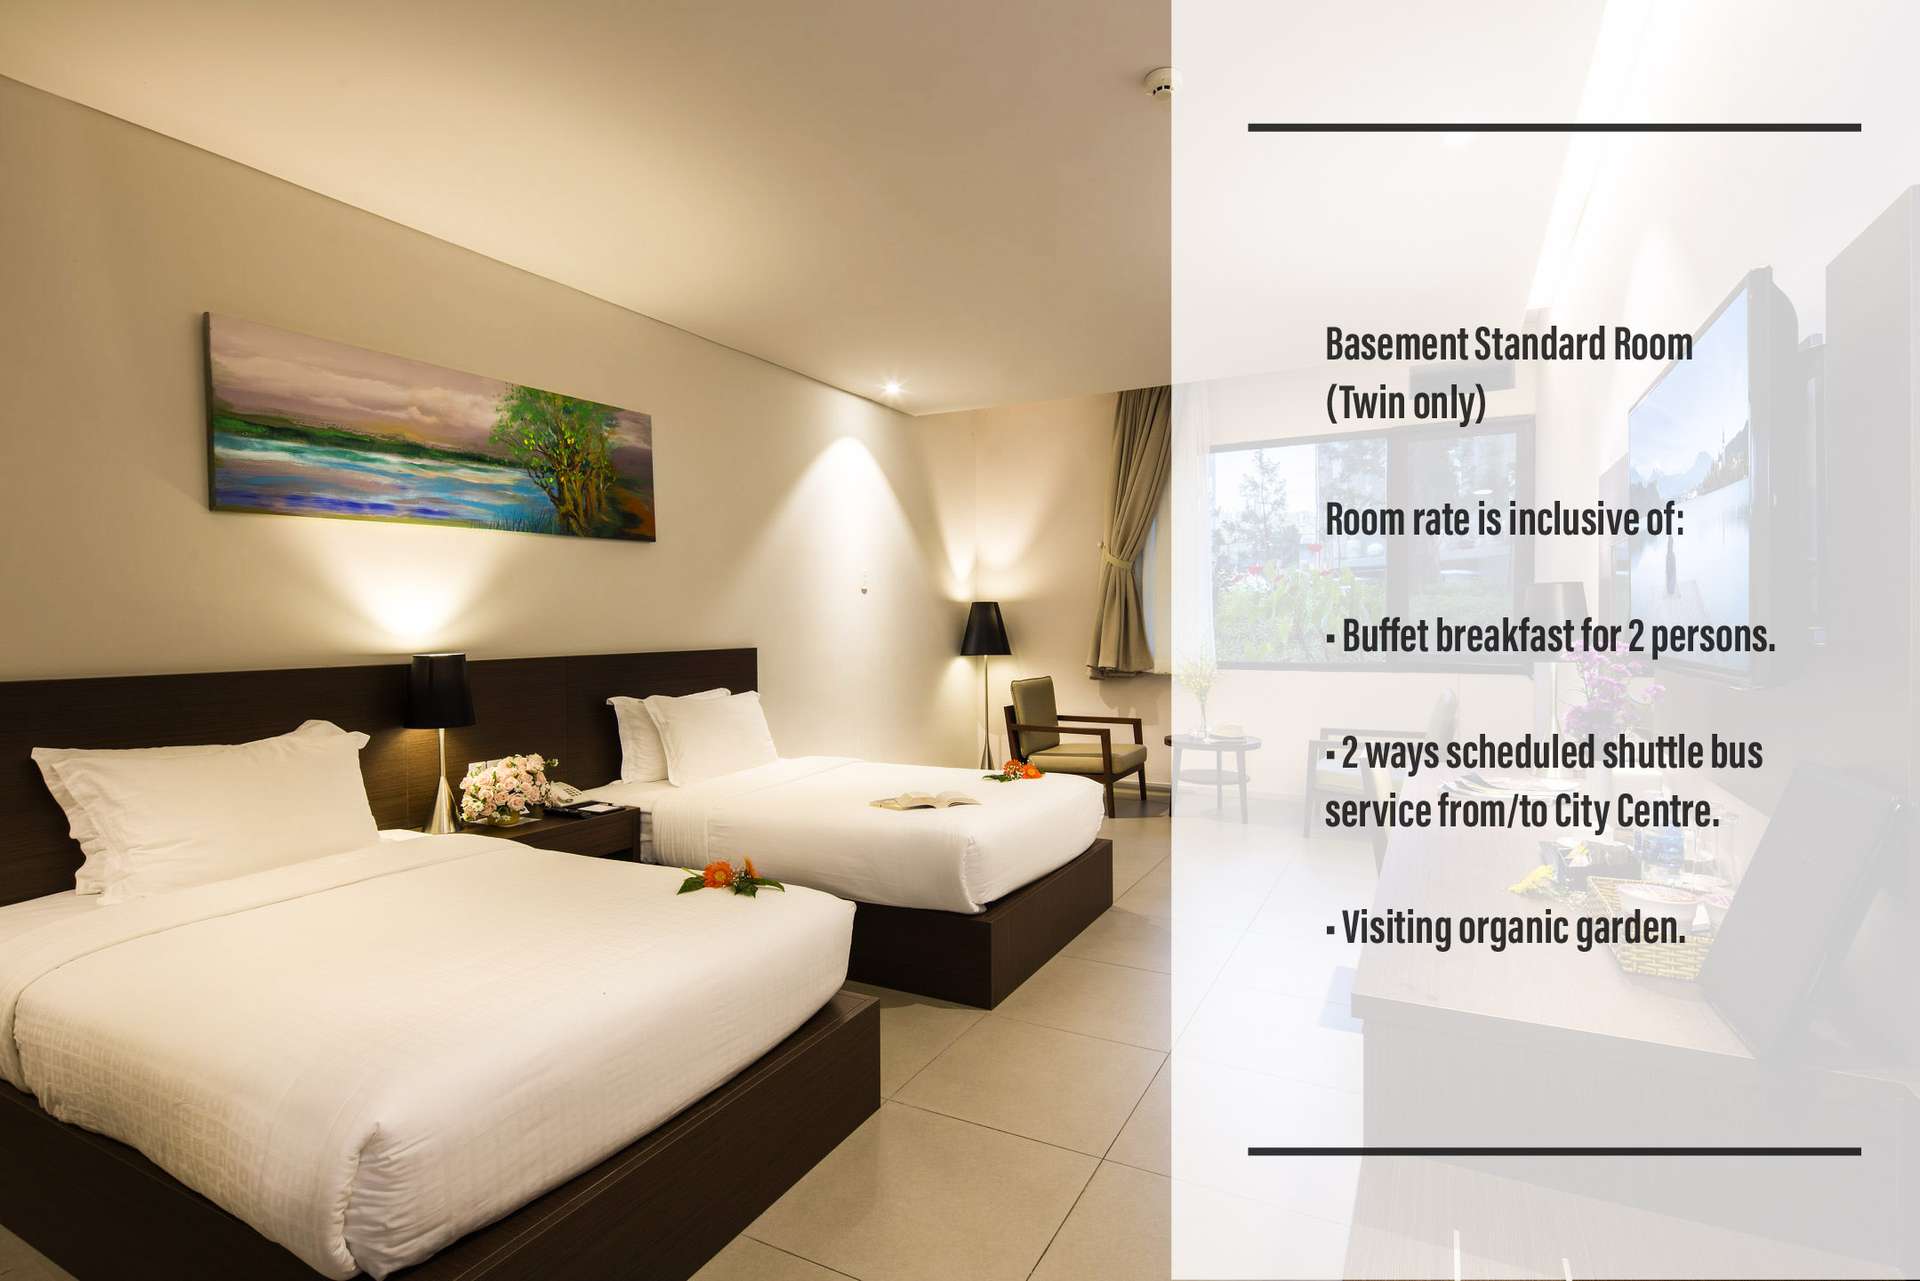 Phòng Basement Standard Twin - Terracotta Hotel & Resort Đà Lạt